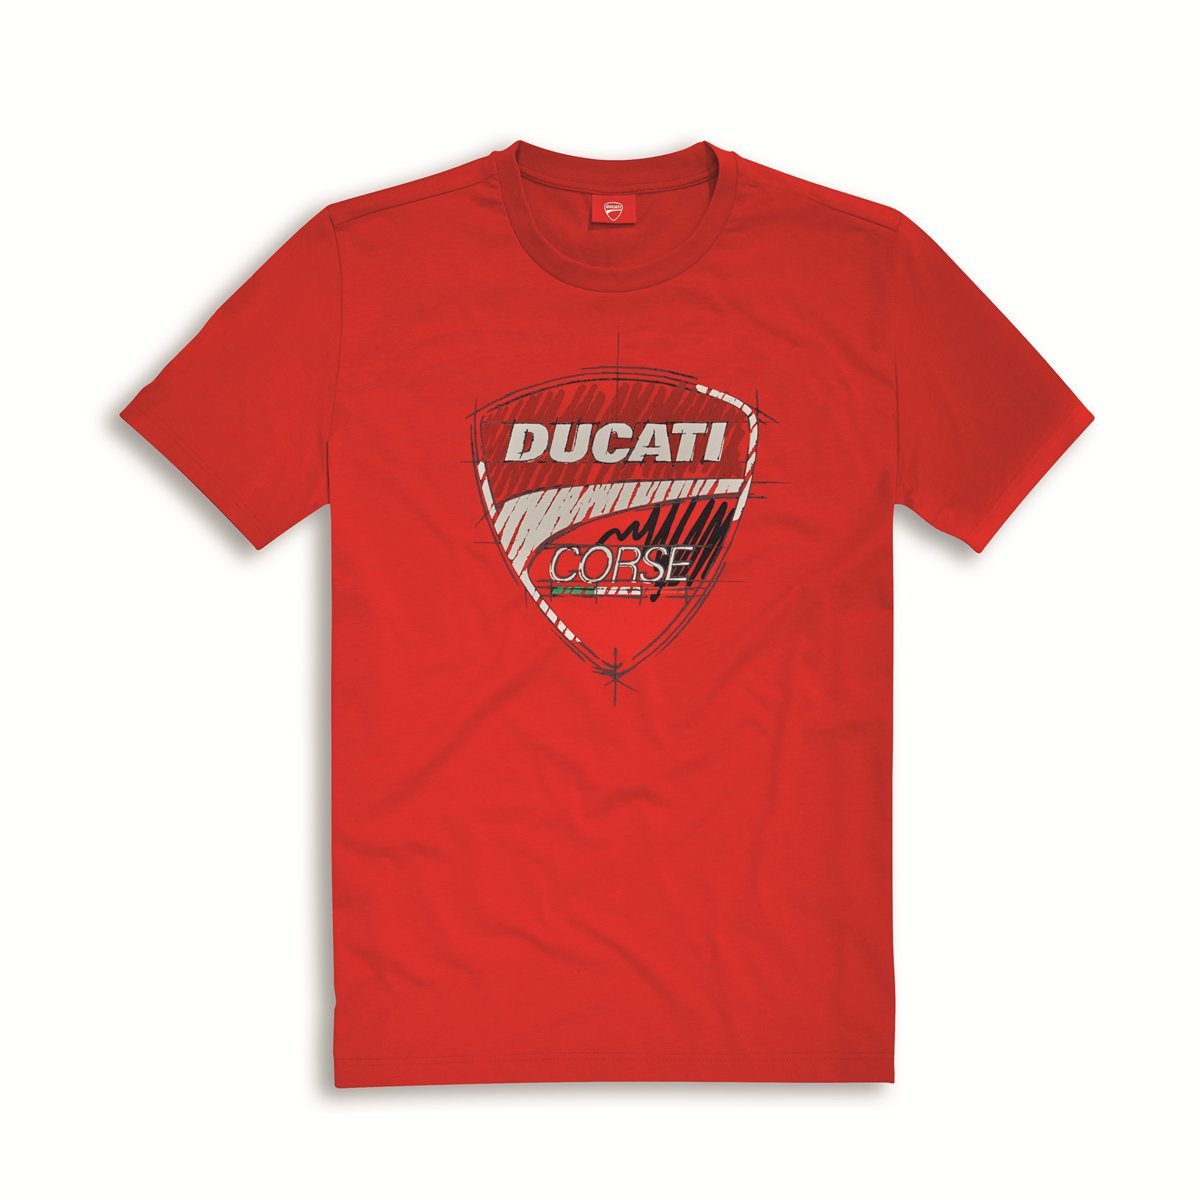 Ducati Corse Sketch Herren T-Shirt rot Größe S von Ducati